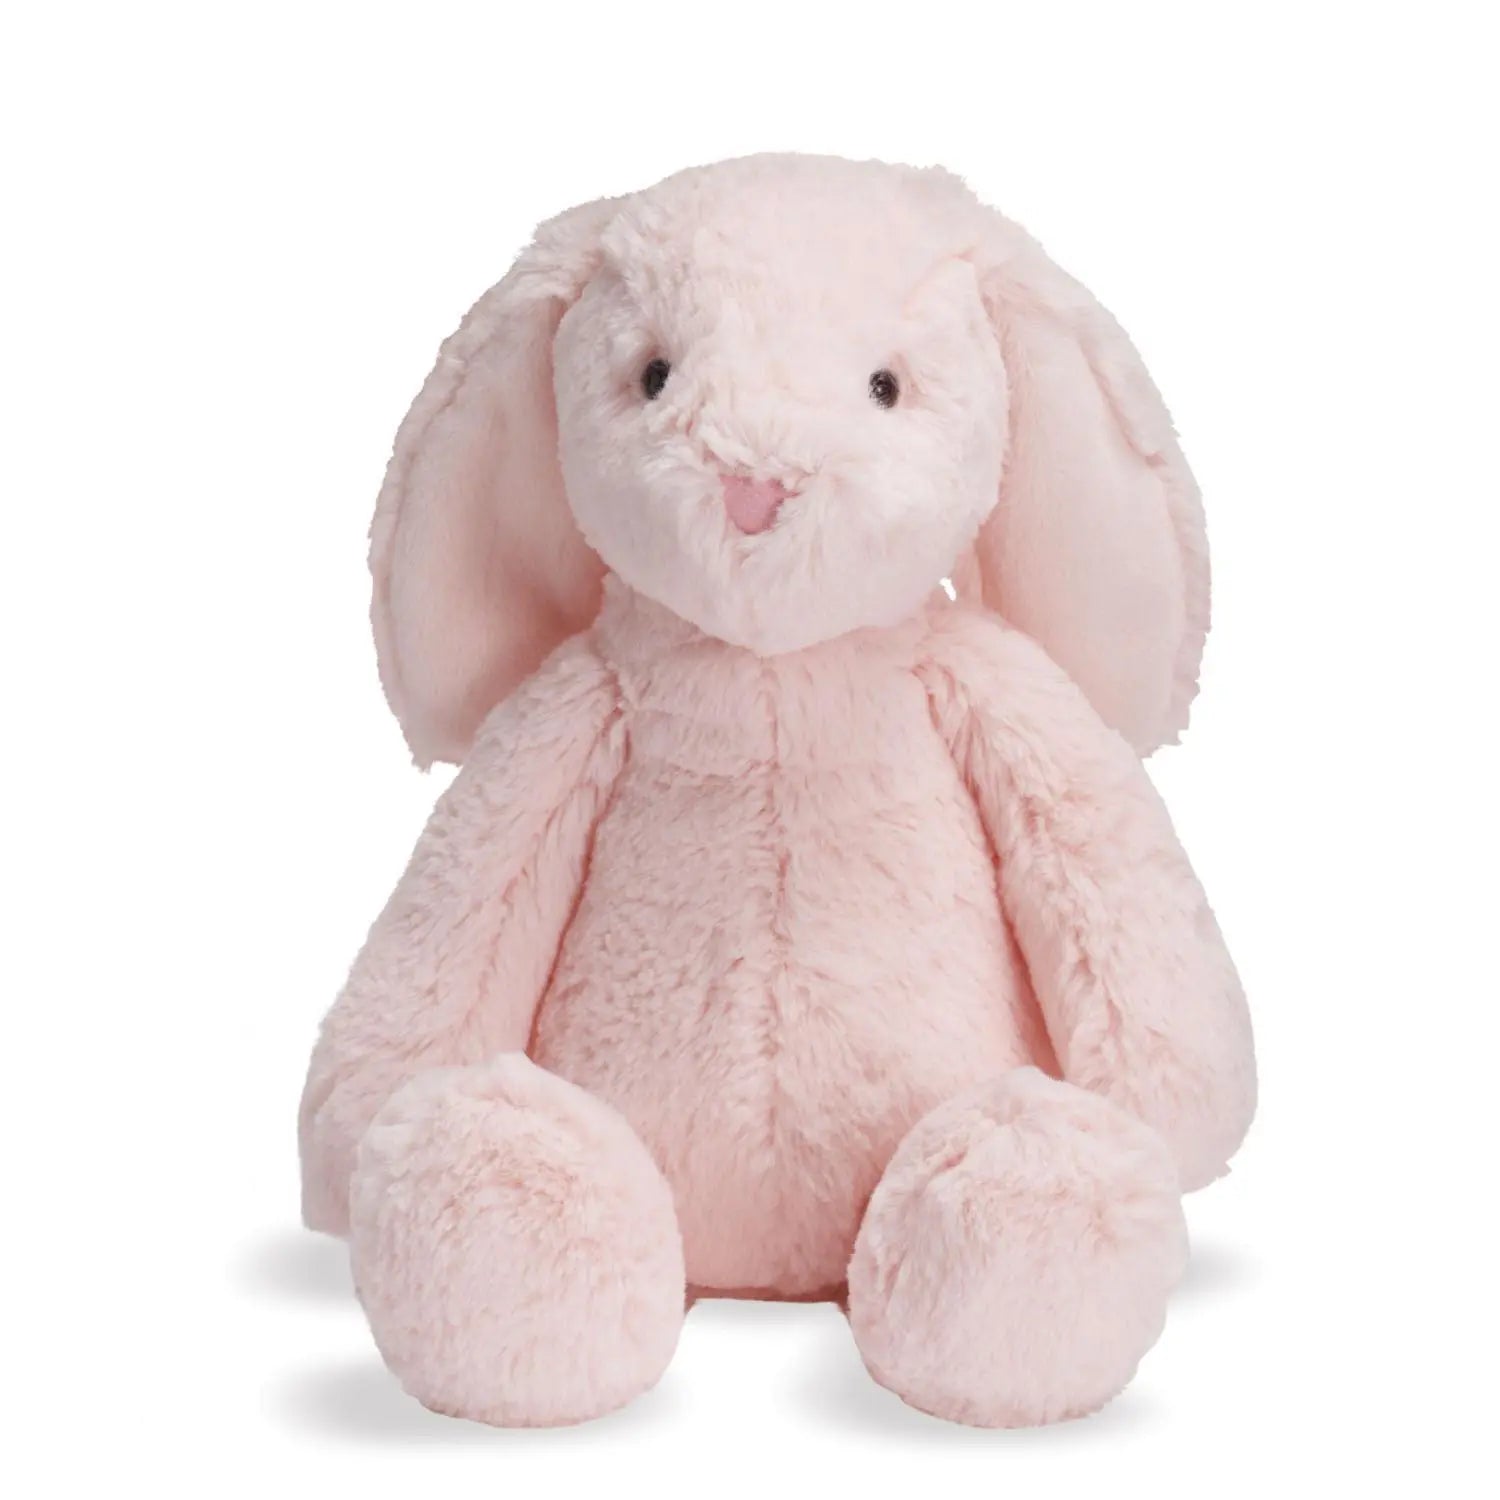 USA Cute Bunny Soft Plush Toys Rabbit Stuffed Animal Baby Kids Gift Animals Doll